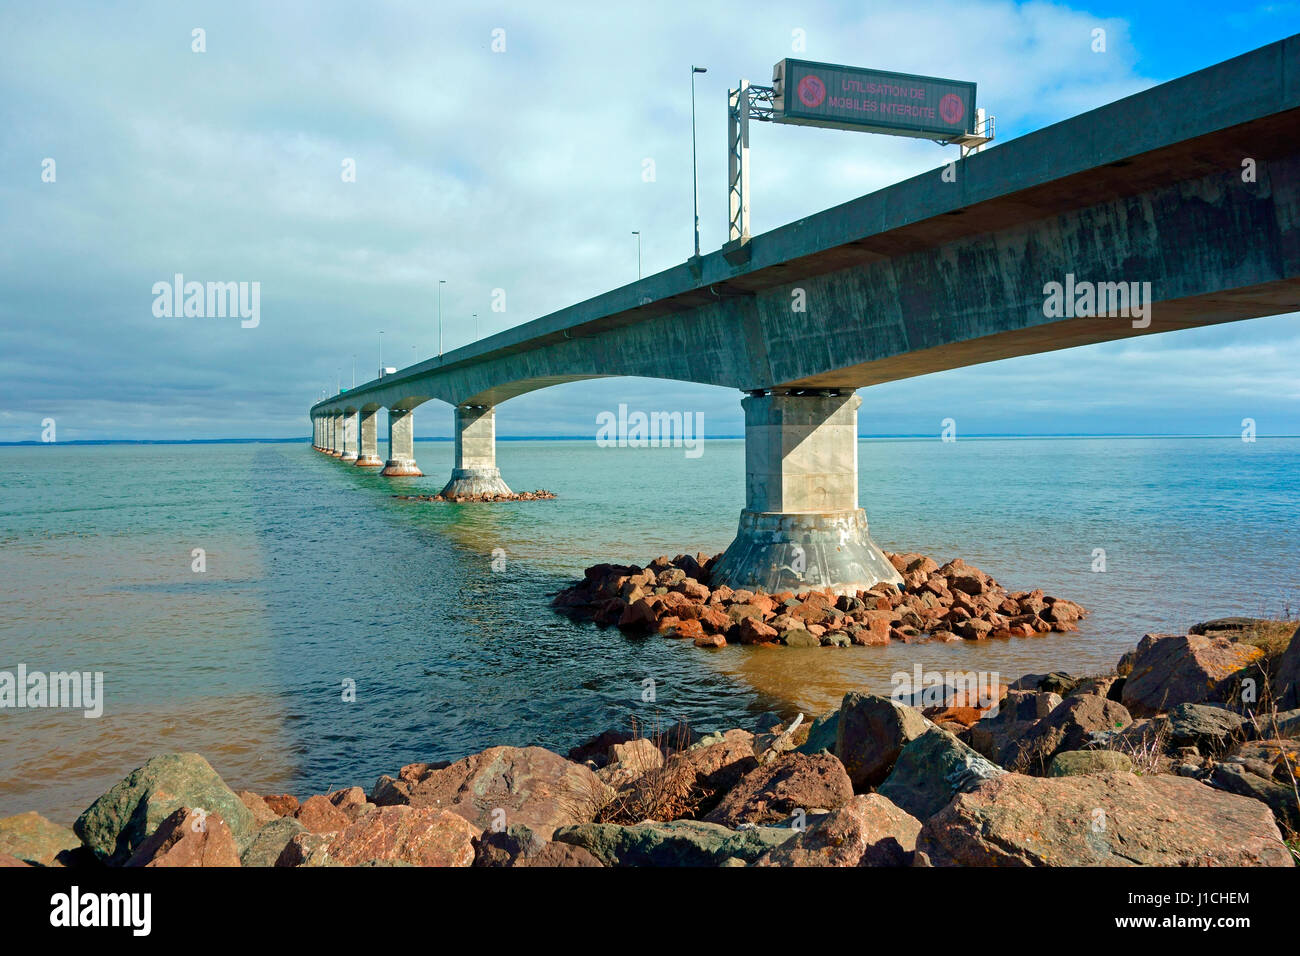 The Confederation Bridge linking New Brunswick to Prince Edward Island in Canada Stock Photo